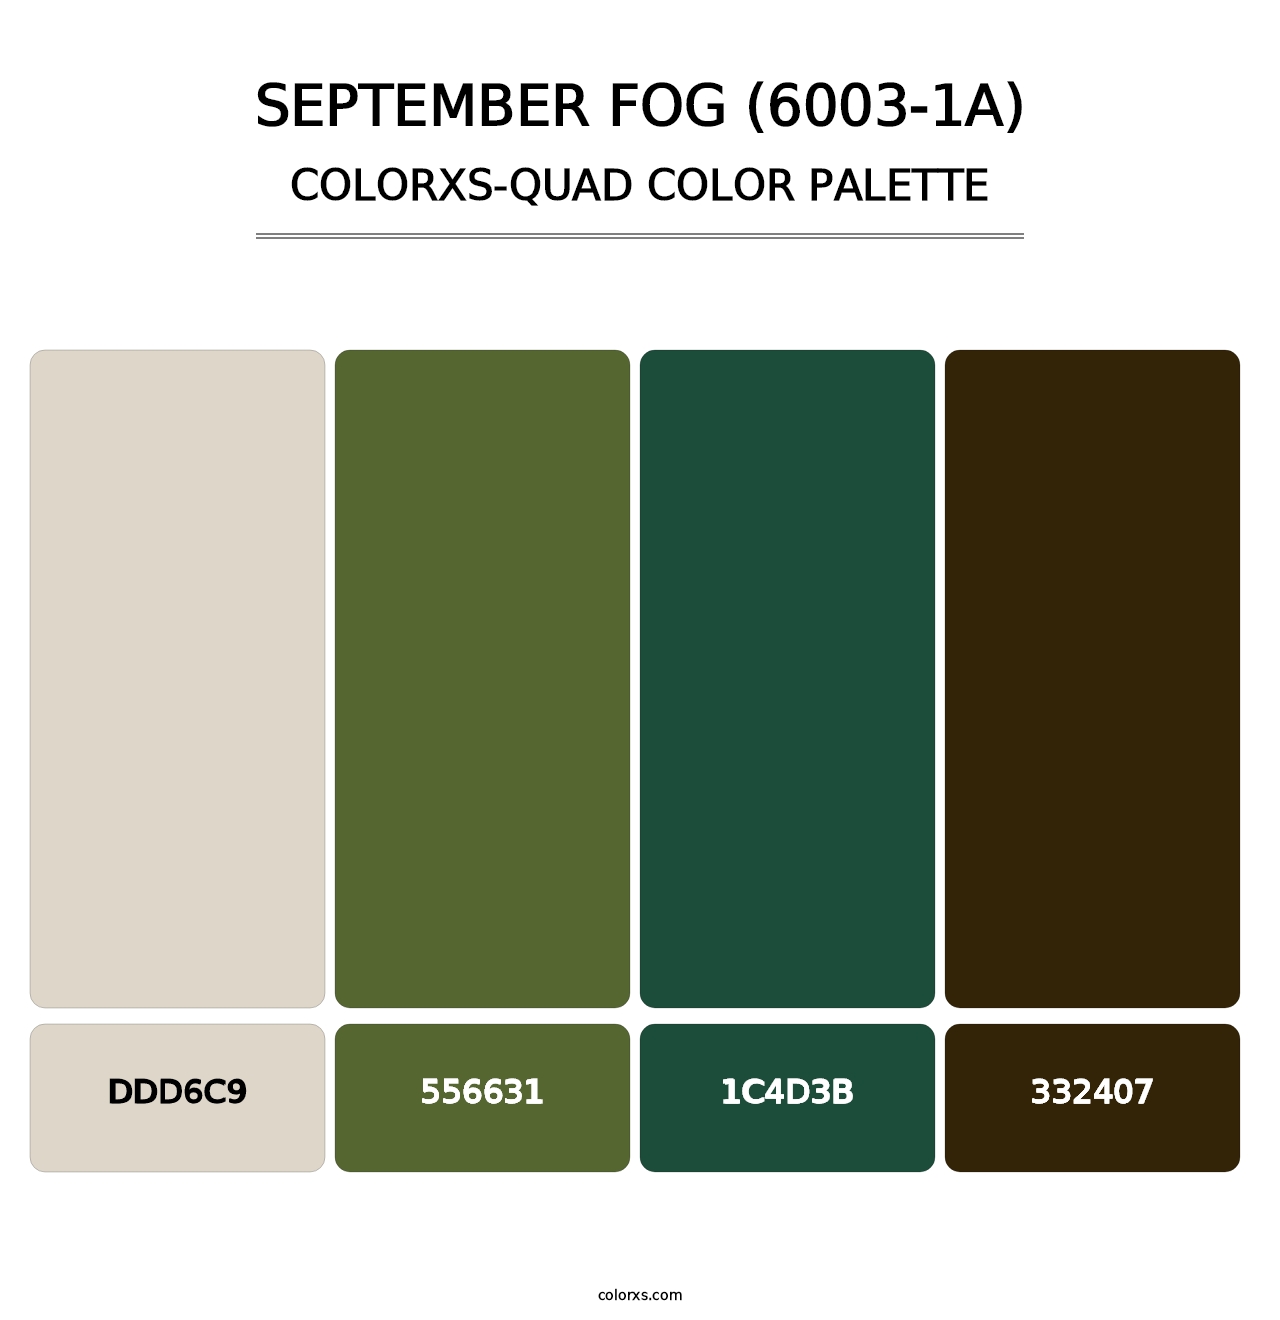 September Fog (6003-1A) - Colorxs Quad Palette